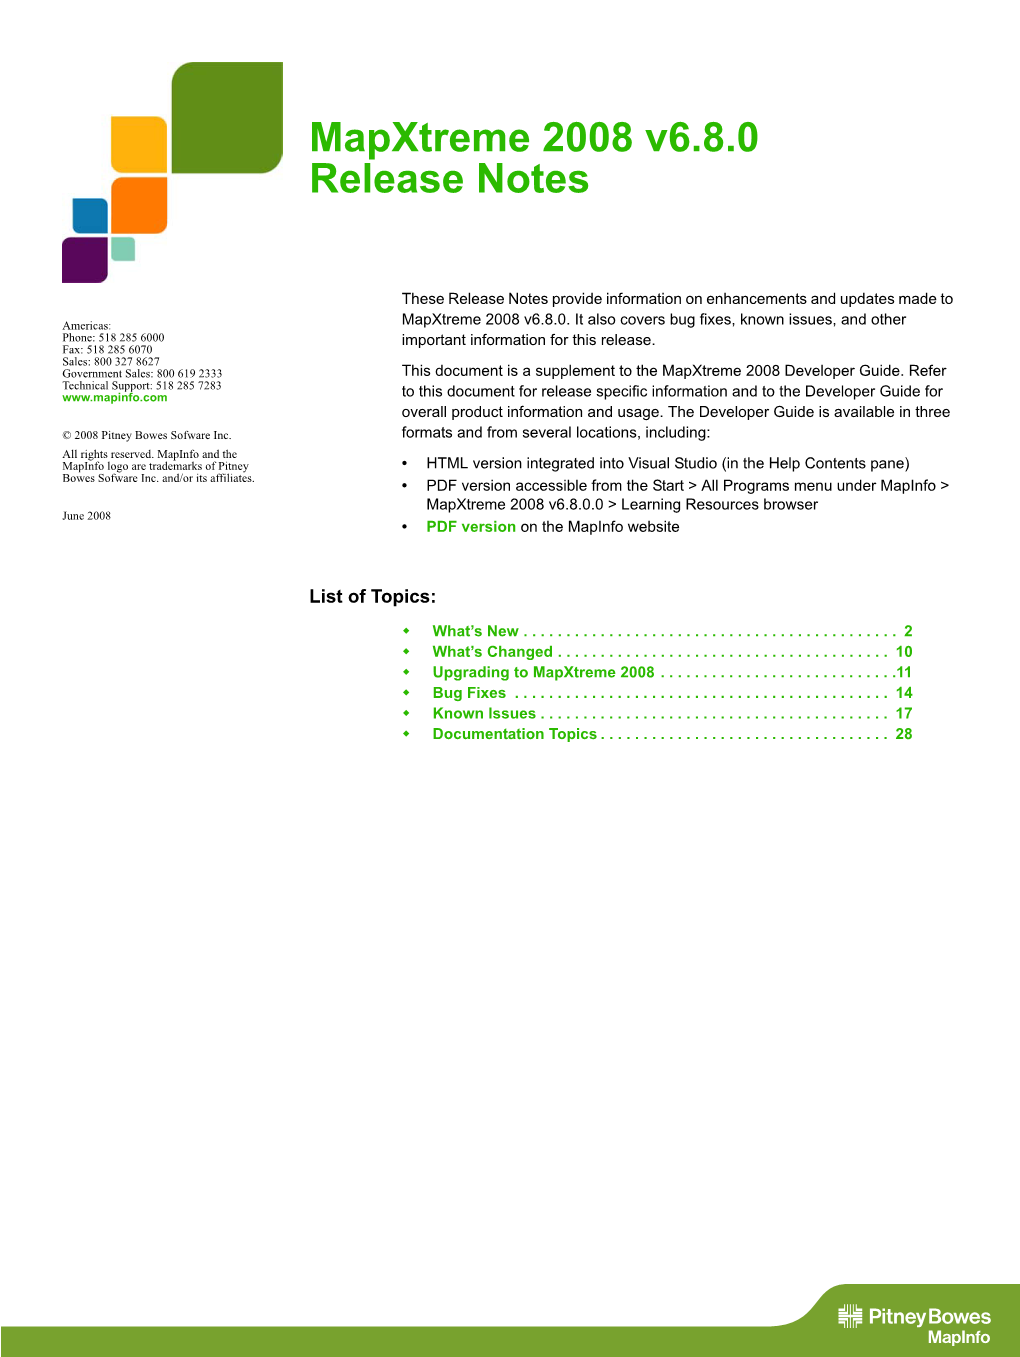 Mapxtreme 2008 V6.8.0 Release Notes